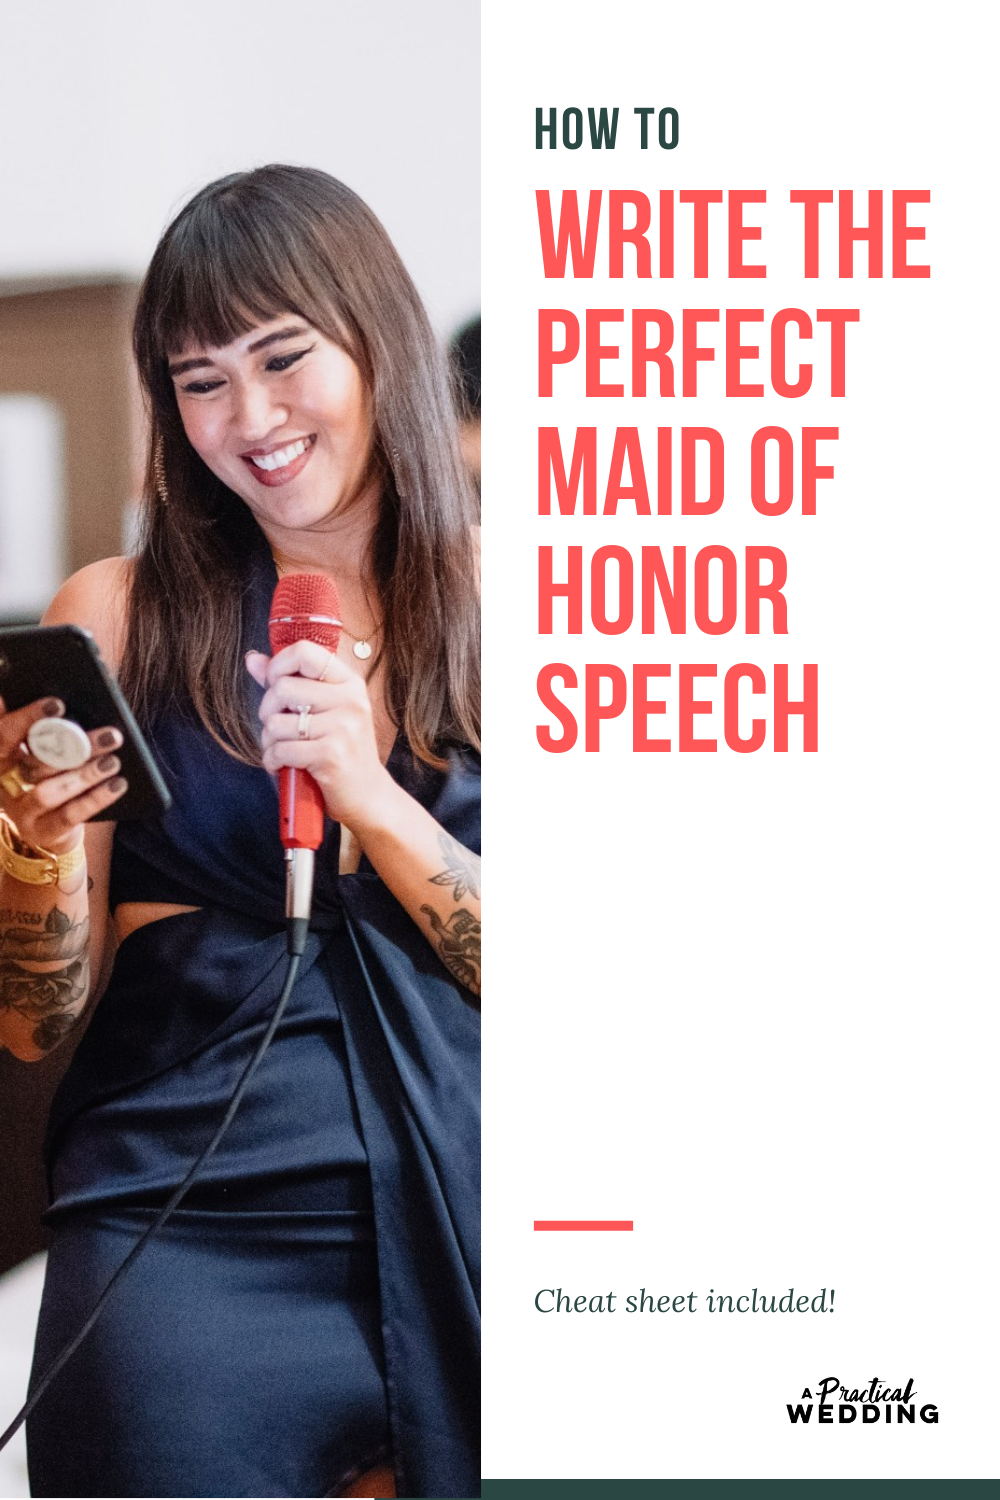 MOH Speech - Maid of Honor Speech: How Write The Best Toast